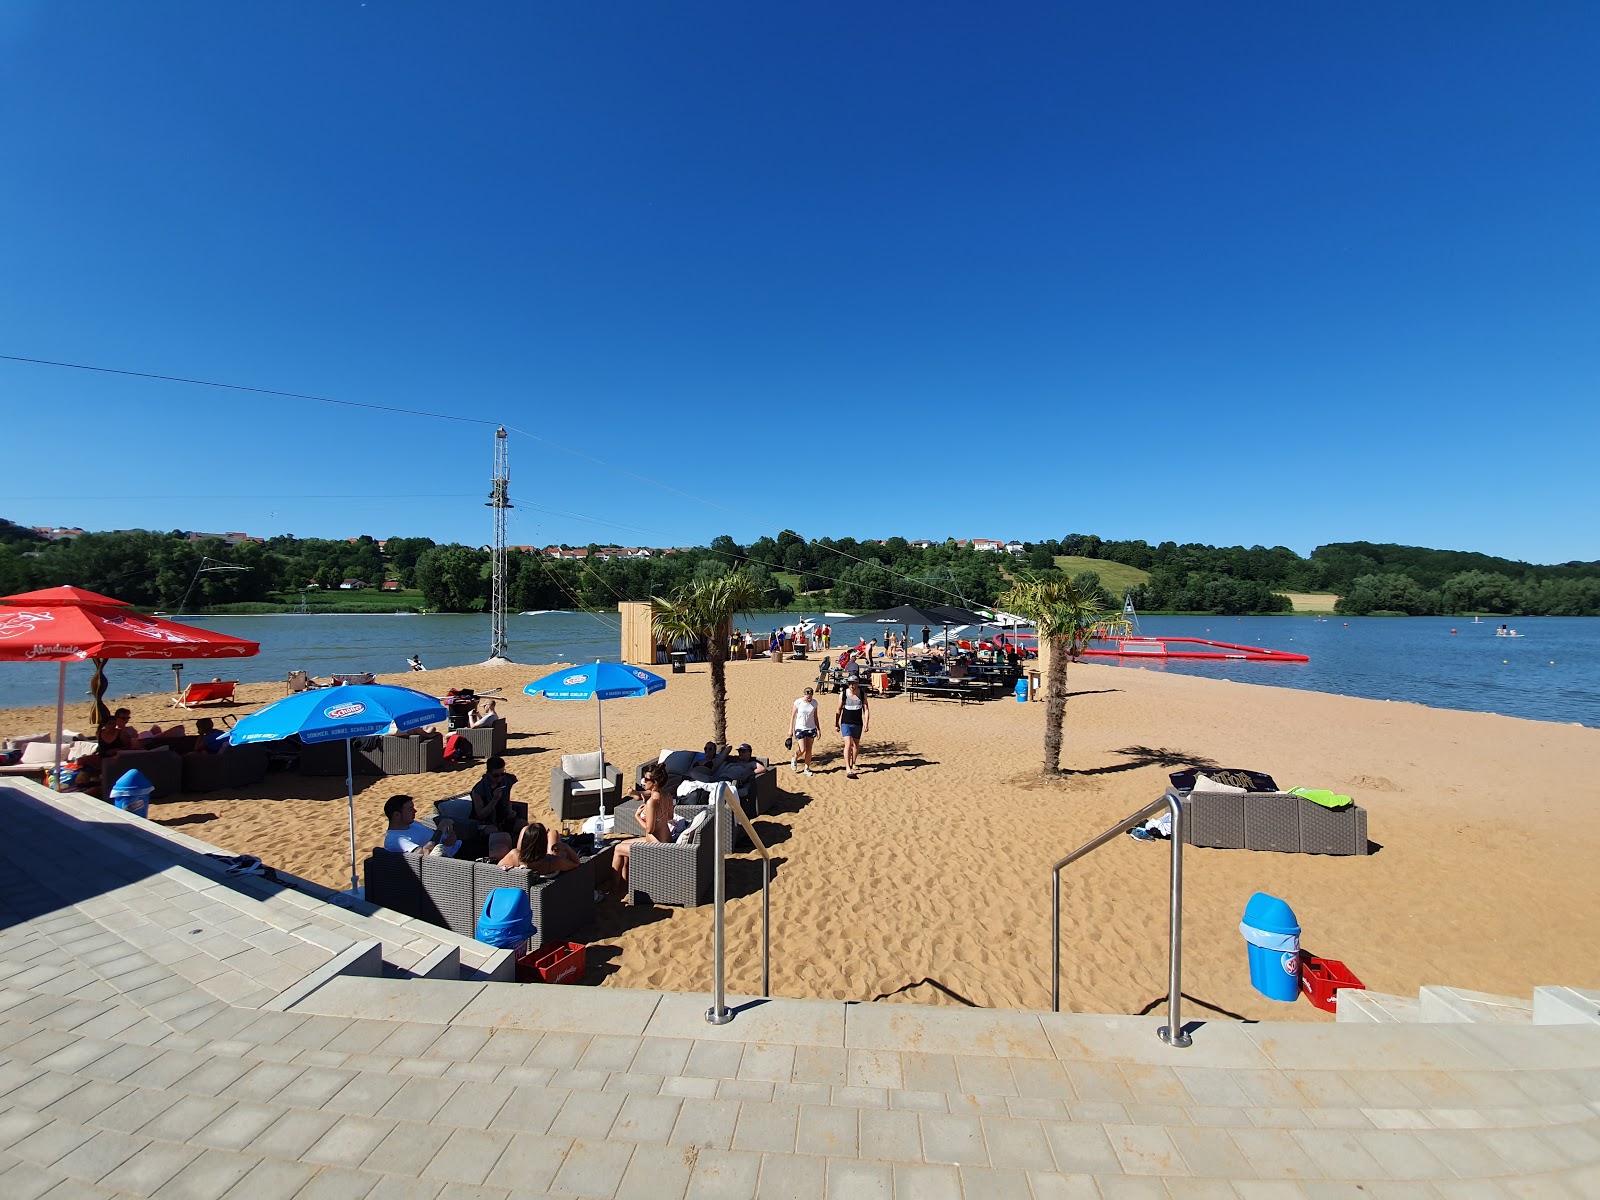 Foto de Spielplatz Wakepark Brombachsee con playa amplia